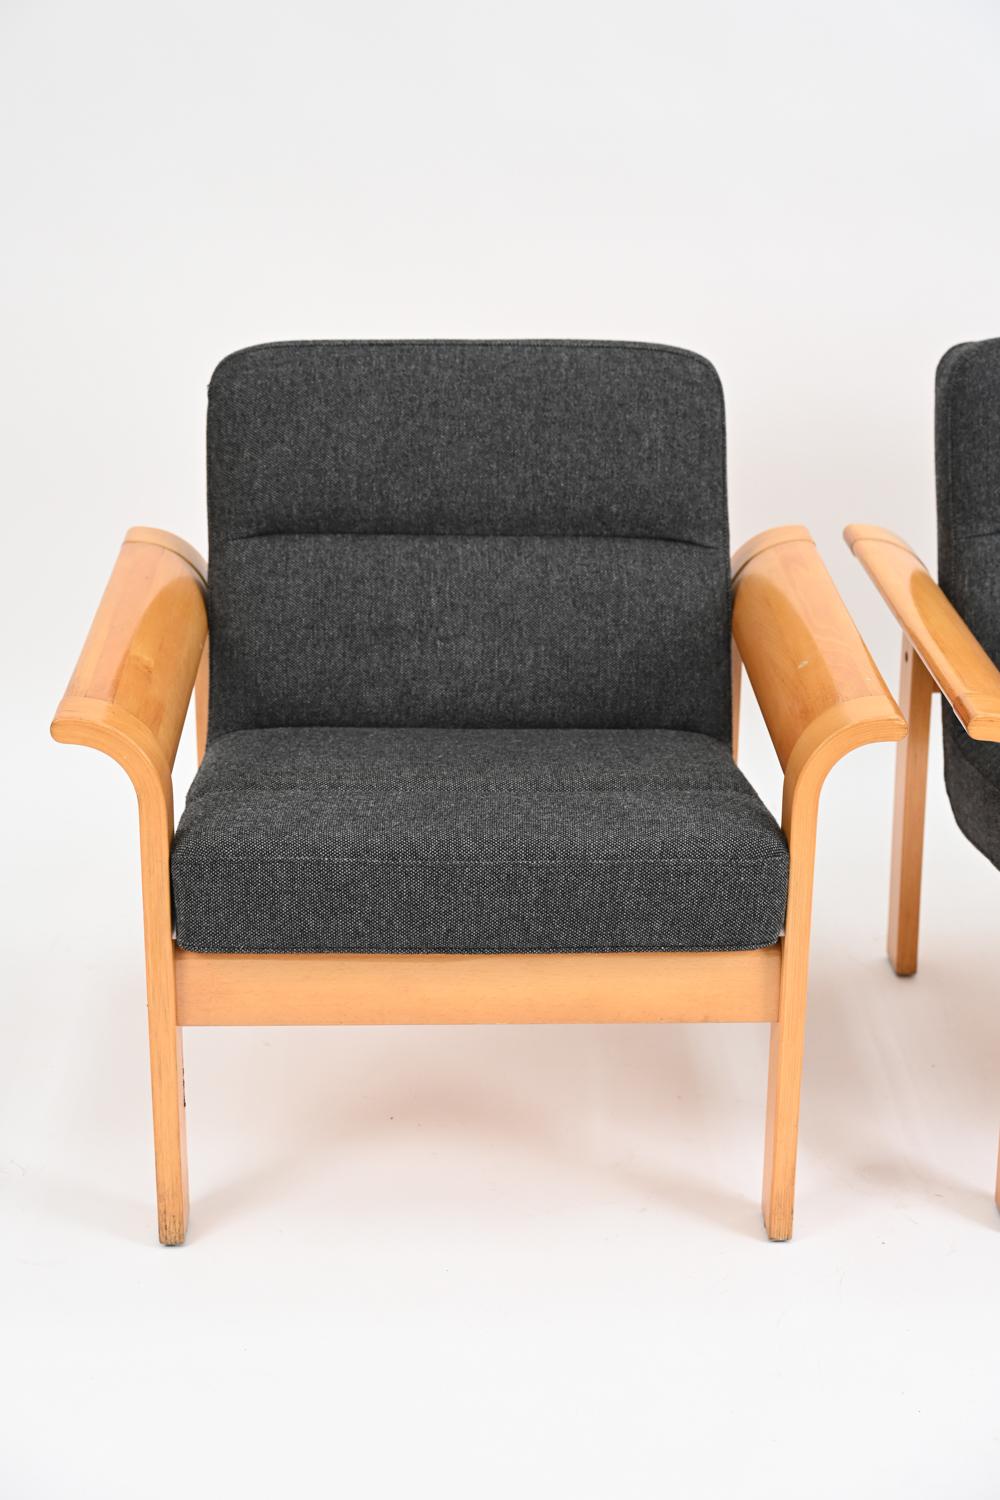 Late 20th Century Pair of Rud Thygesen for Magnus Olesen Botium Lounge Chairs